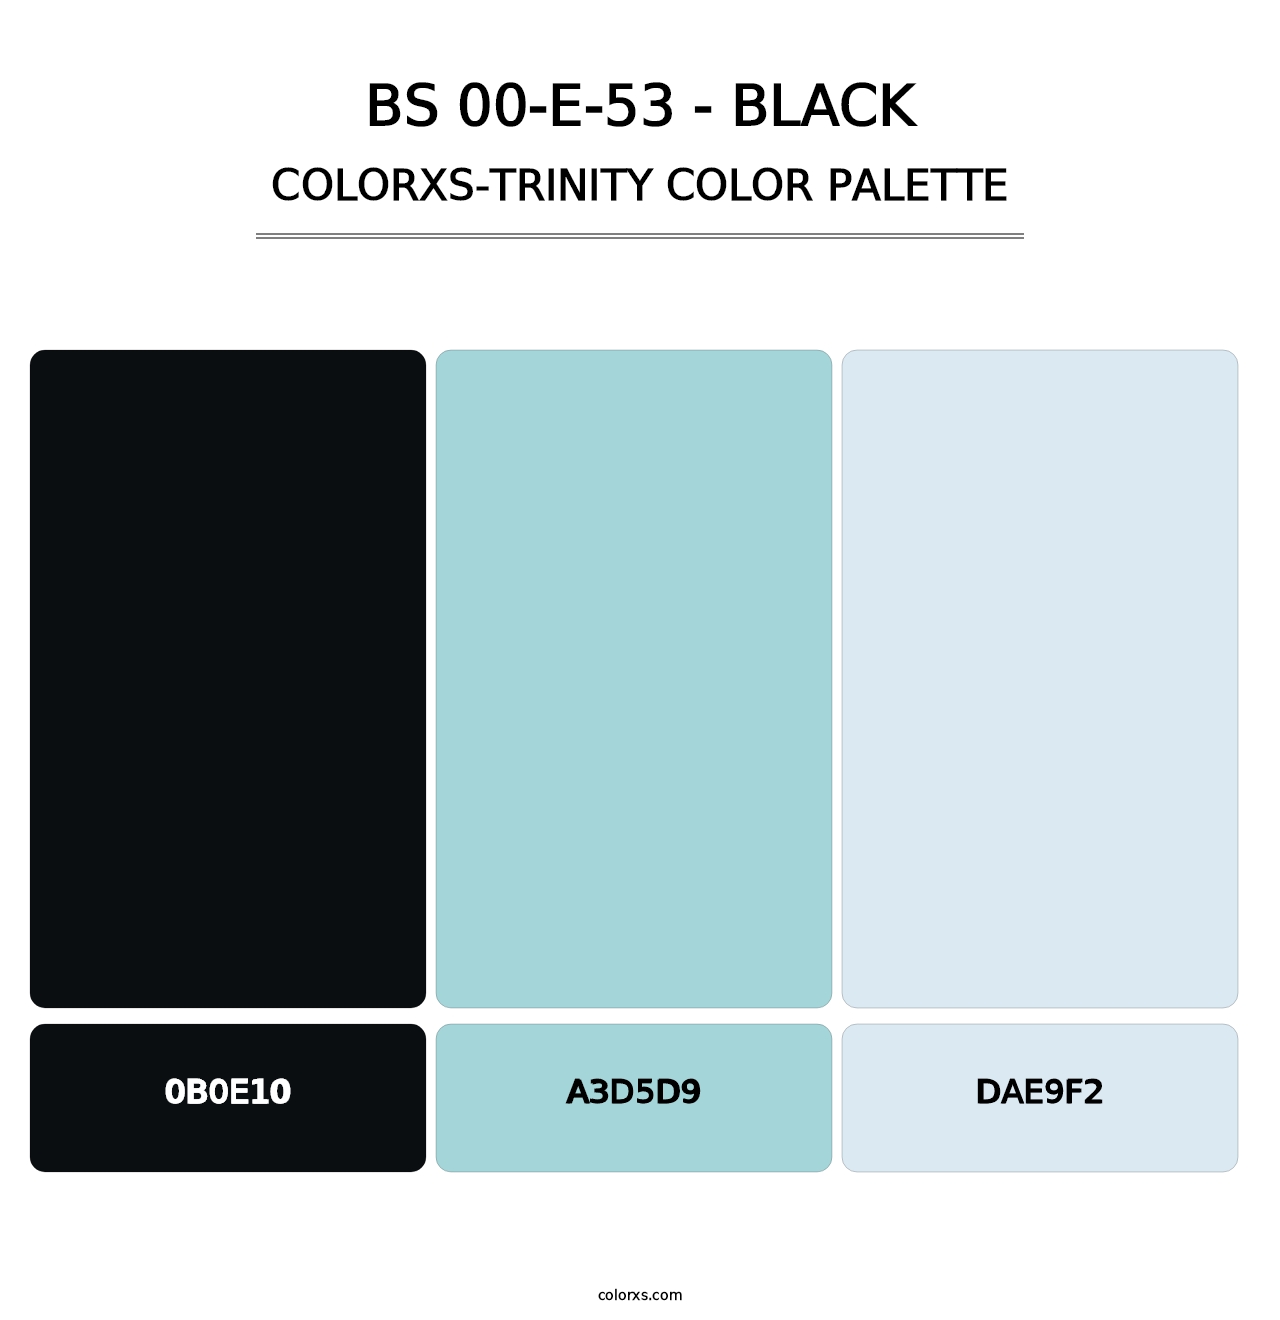 BS 00-E-53 - Black - Colorxs Trinity Palette